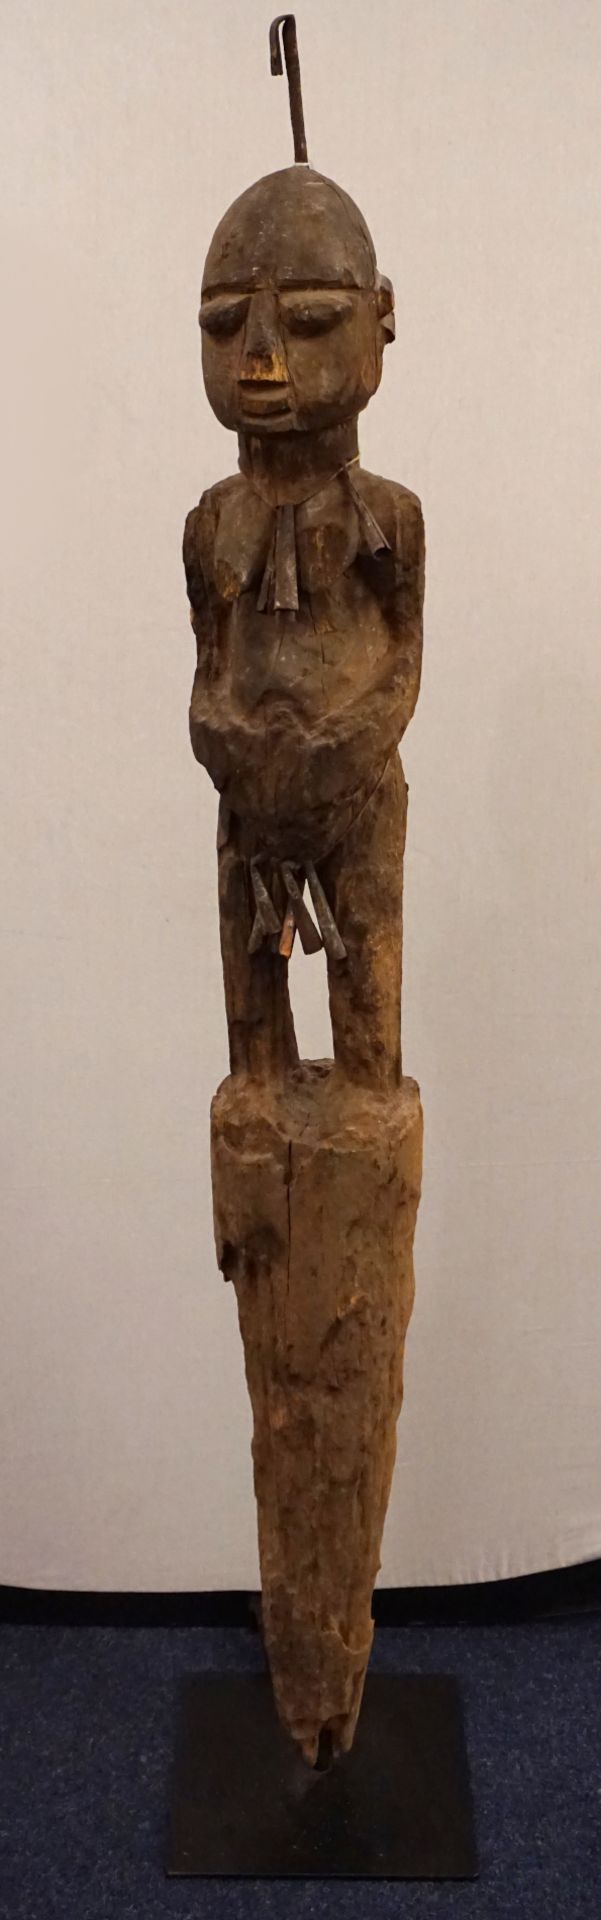 1 Figur lt. EL im Stil Anago-Fon Kultur Benin, rücks. bez. "Bochio Fon, Benin" Holz/Metall, ca. H mi